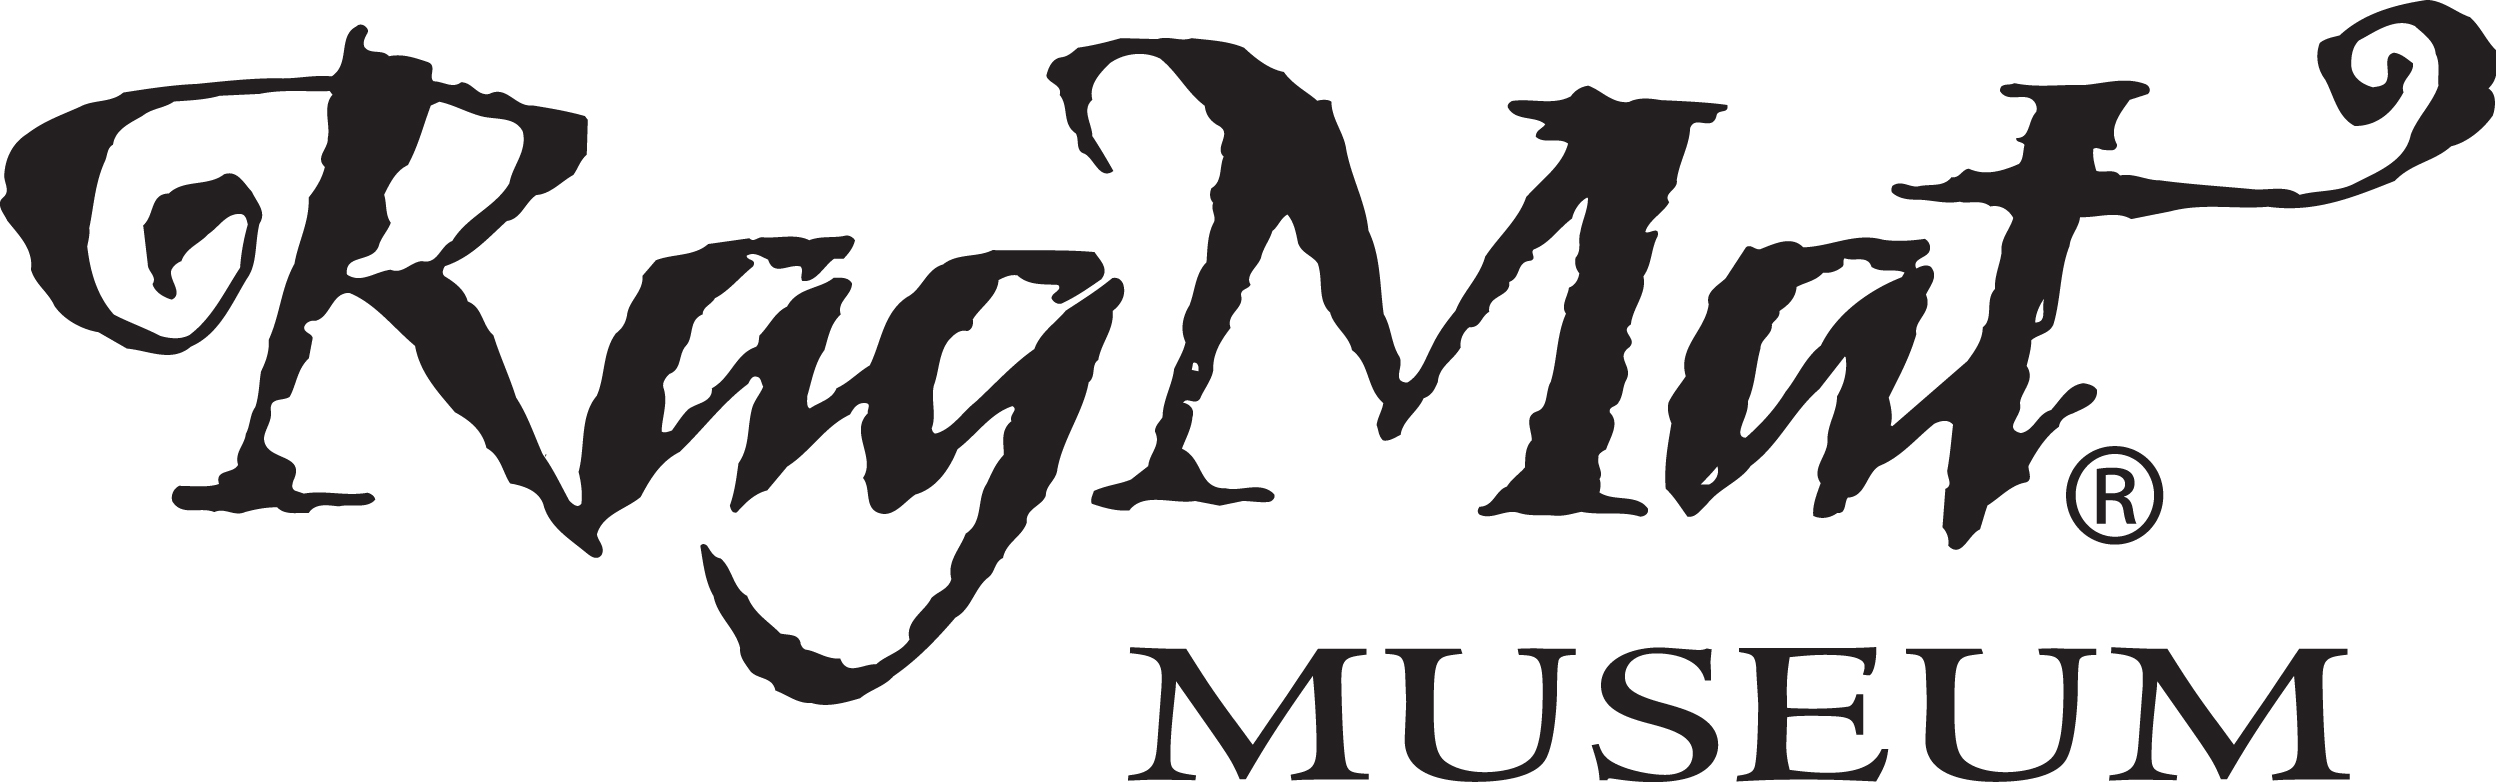 RagMatMuseum_Logo.jpg